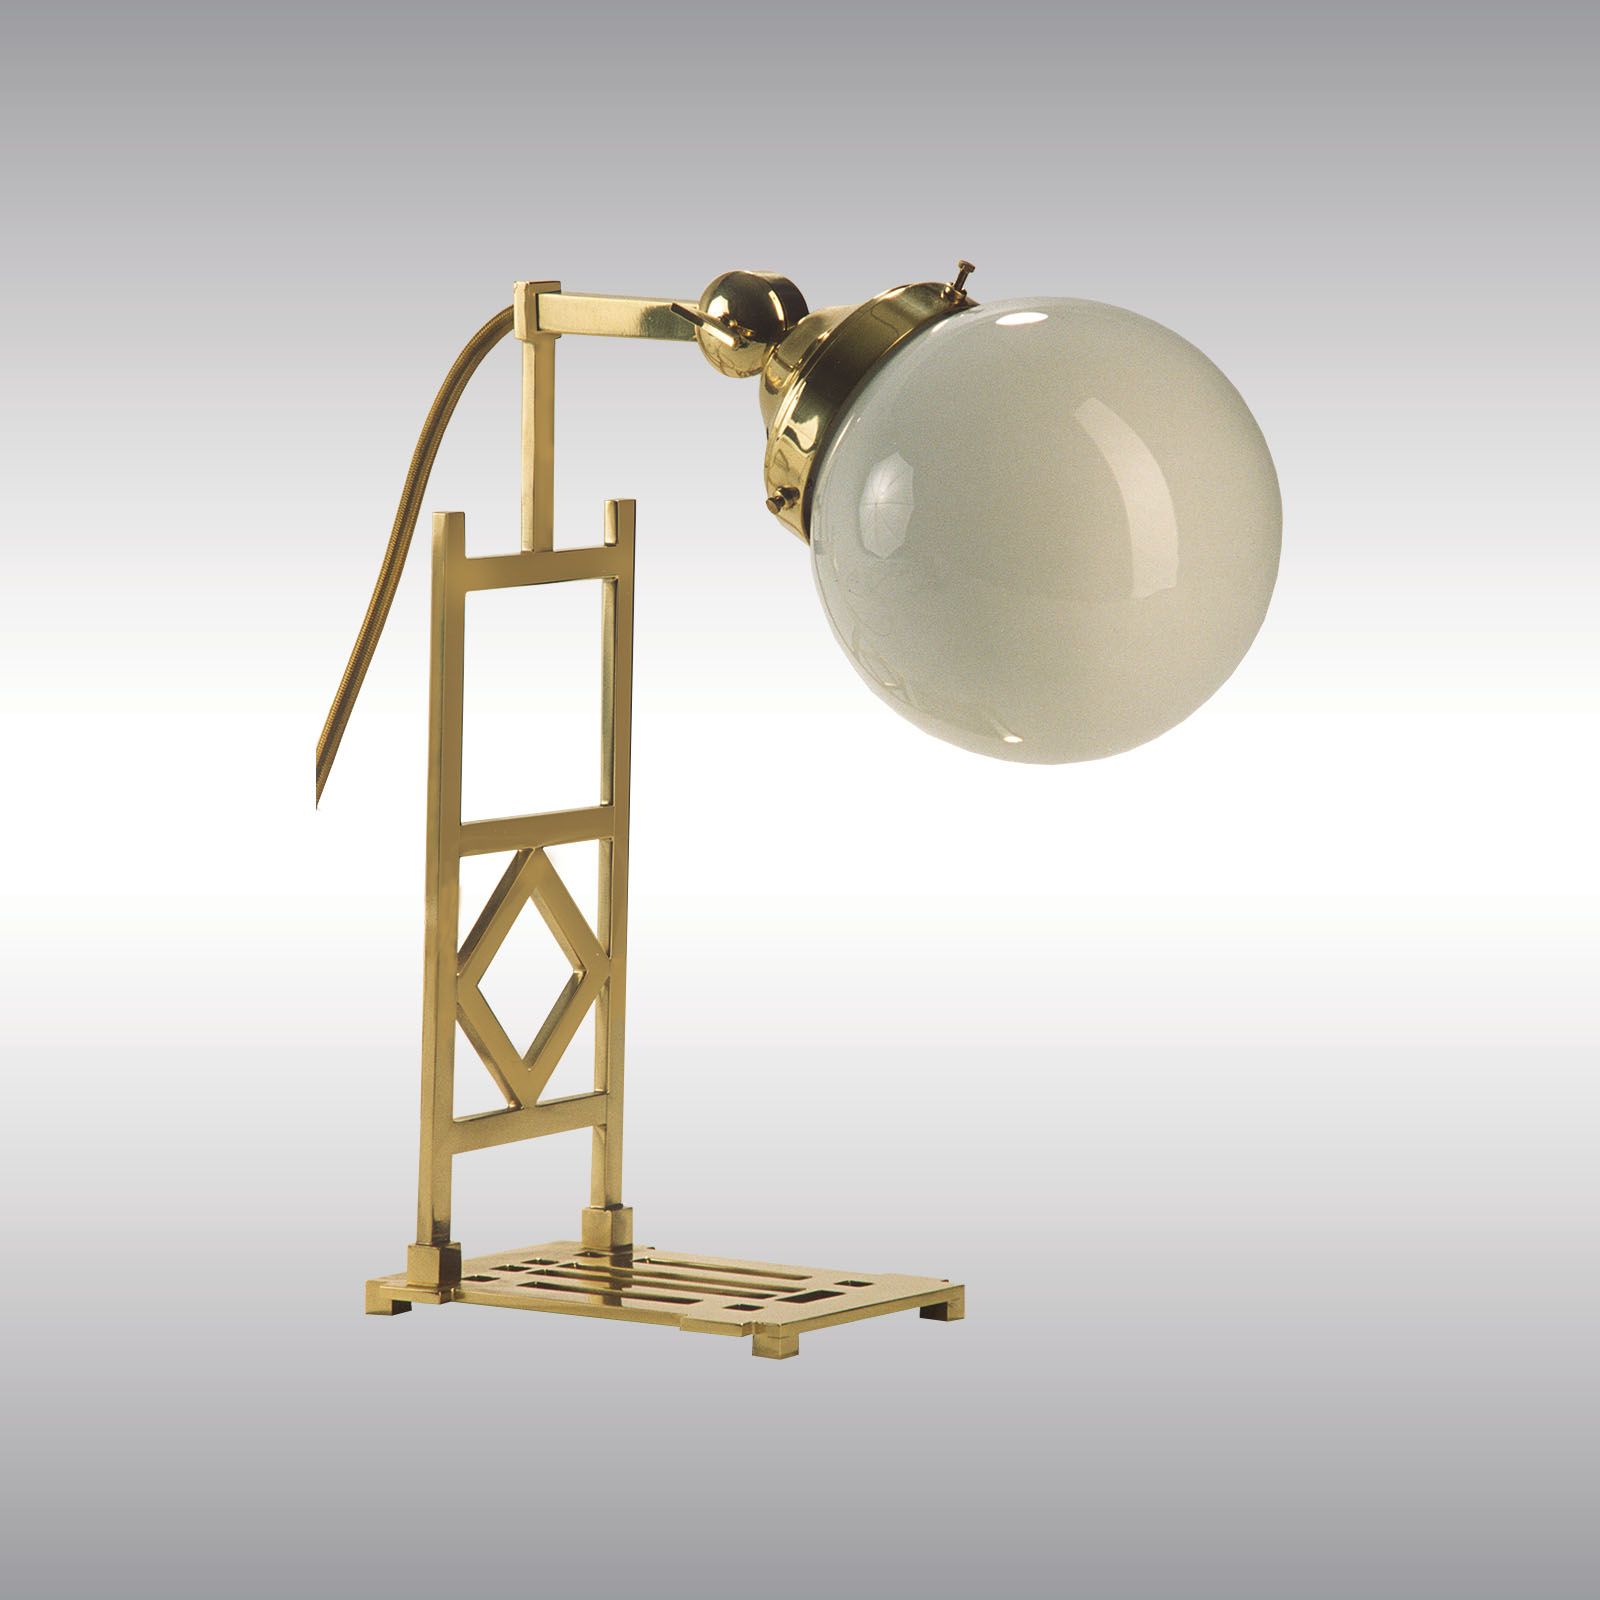 WOKA LAMPS VIENNA - OrderNr.: 9921|KM50 - Design: Koloman (Kolo) Moser